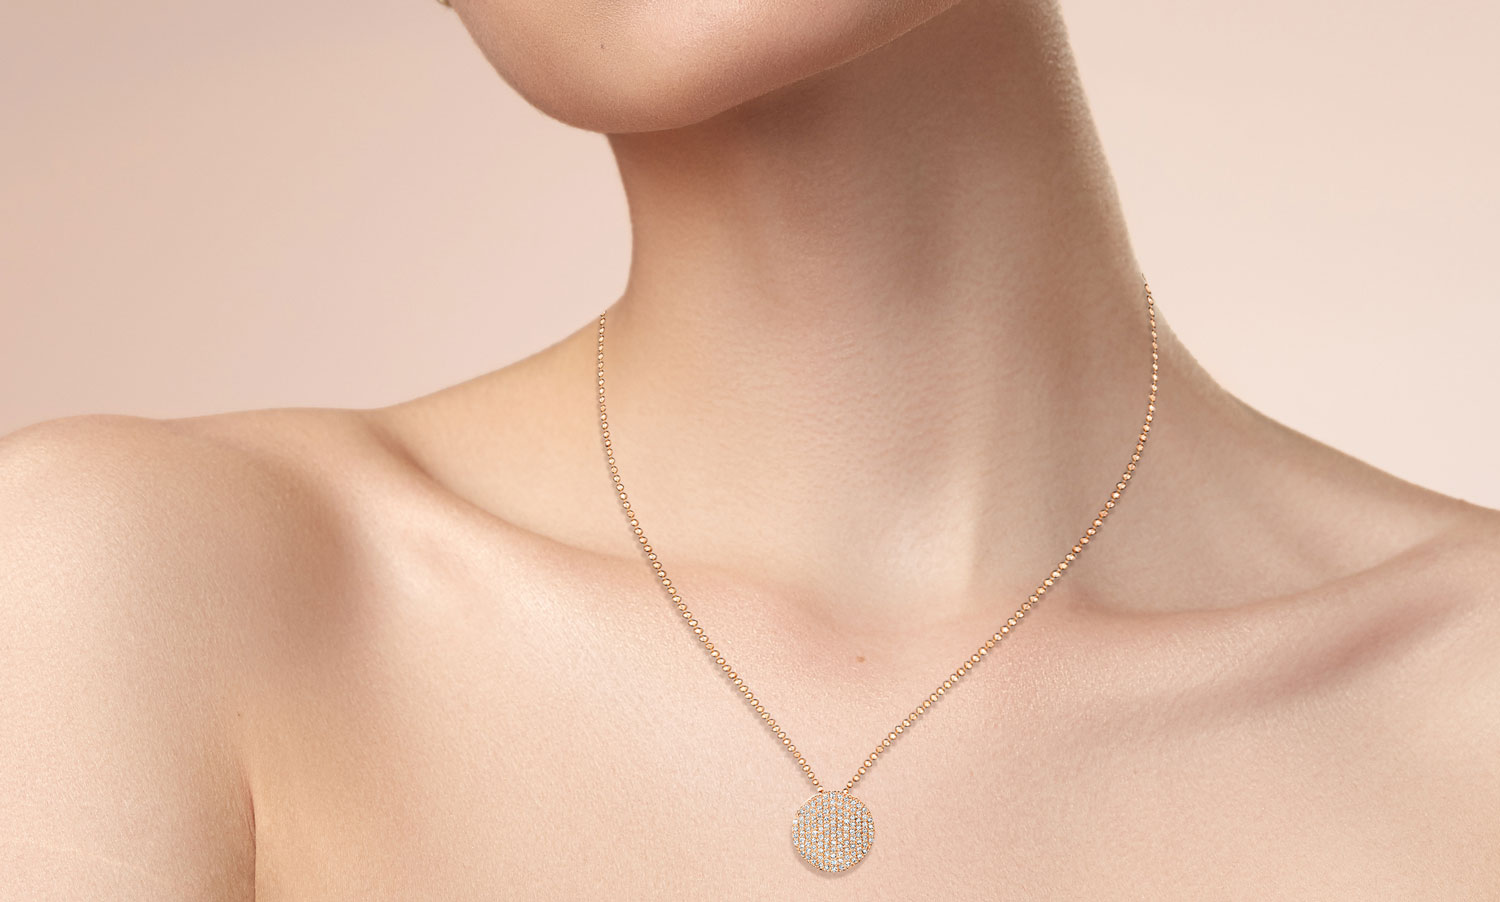 Phillips House "Affair" 14kt Rose Gold Diamond Infinity Women's Necklace